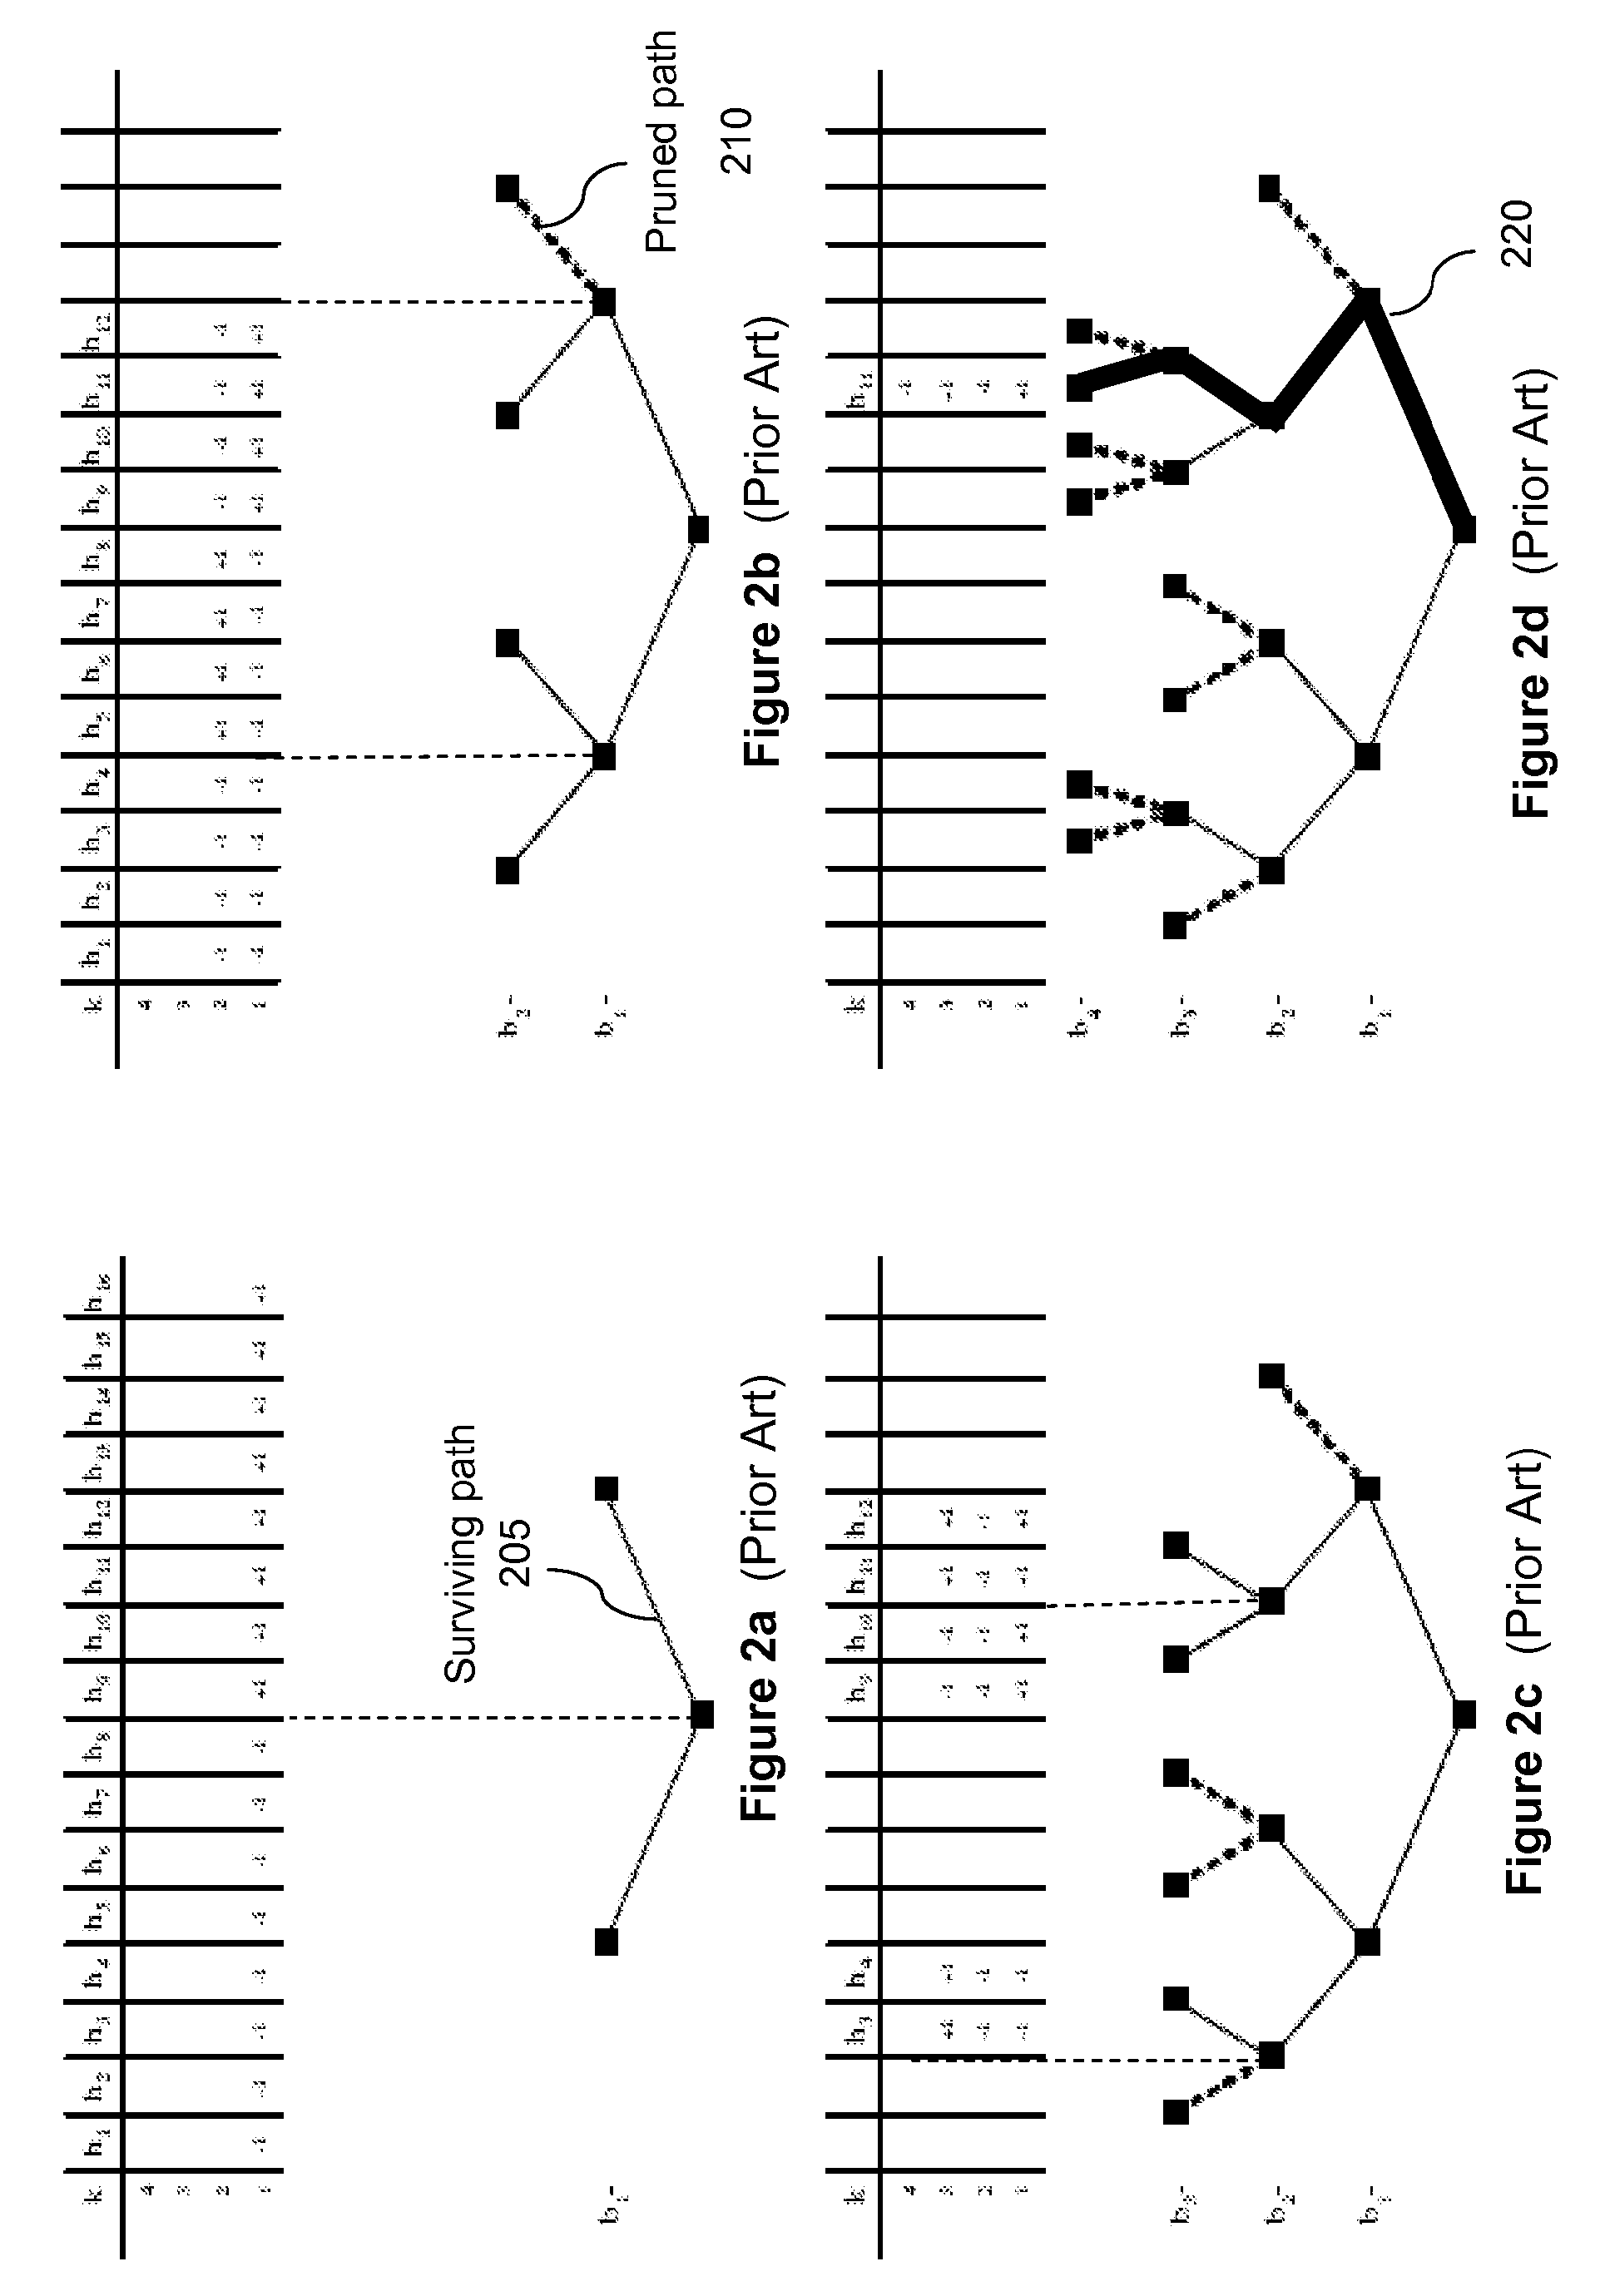 M-algorithm multiuser detector with correlation based pruning